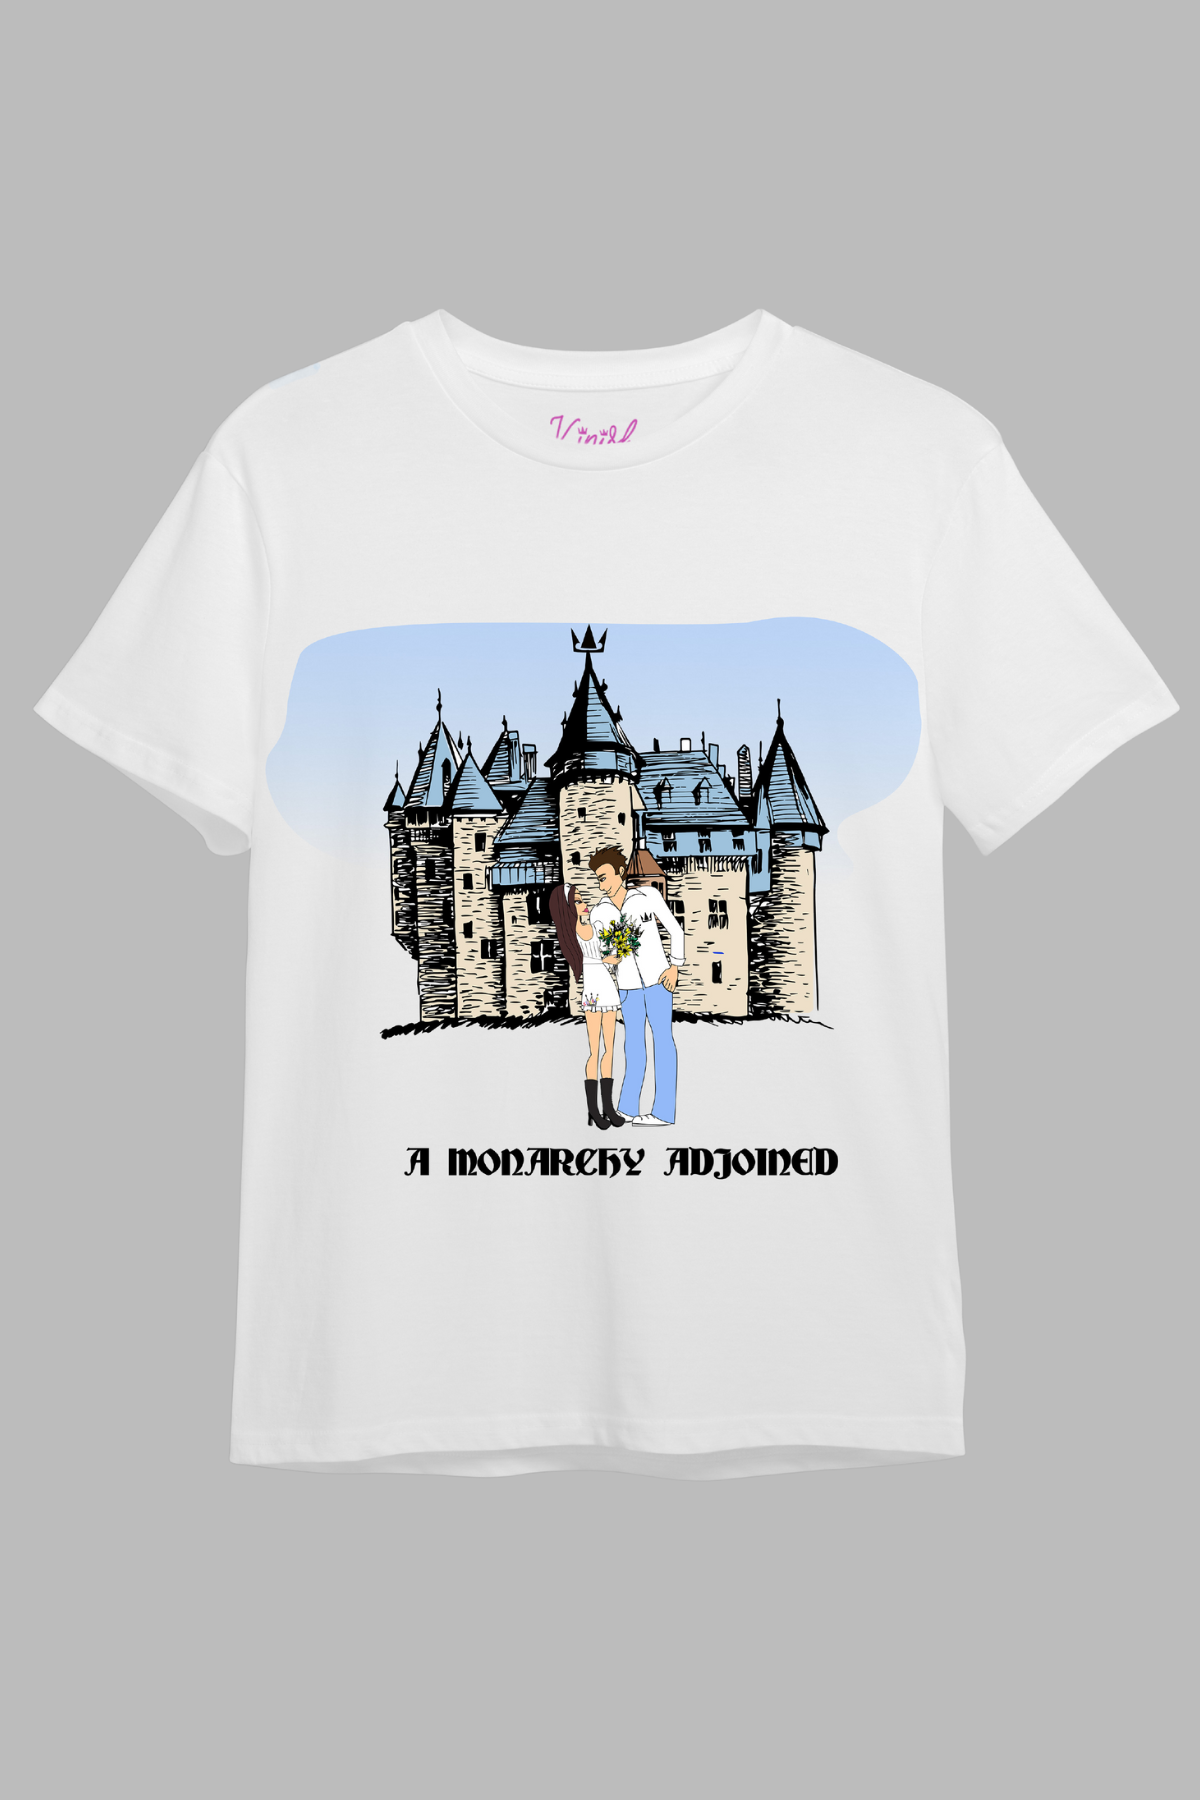 A Monarchy Adjoined T-shirt